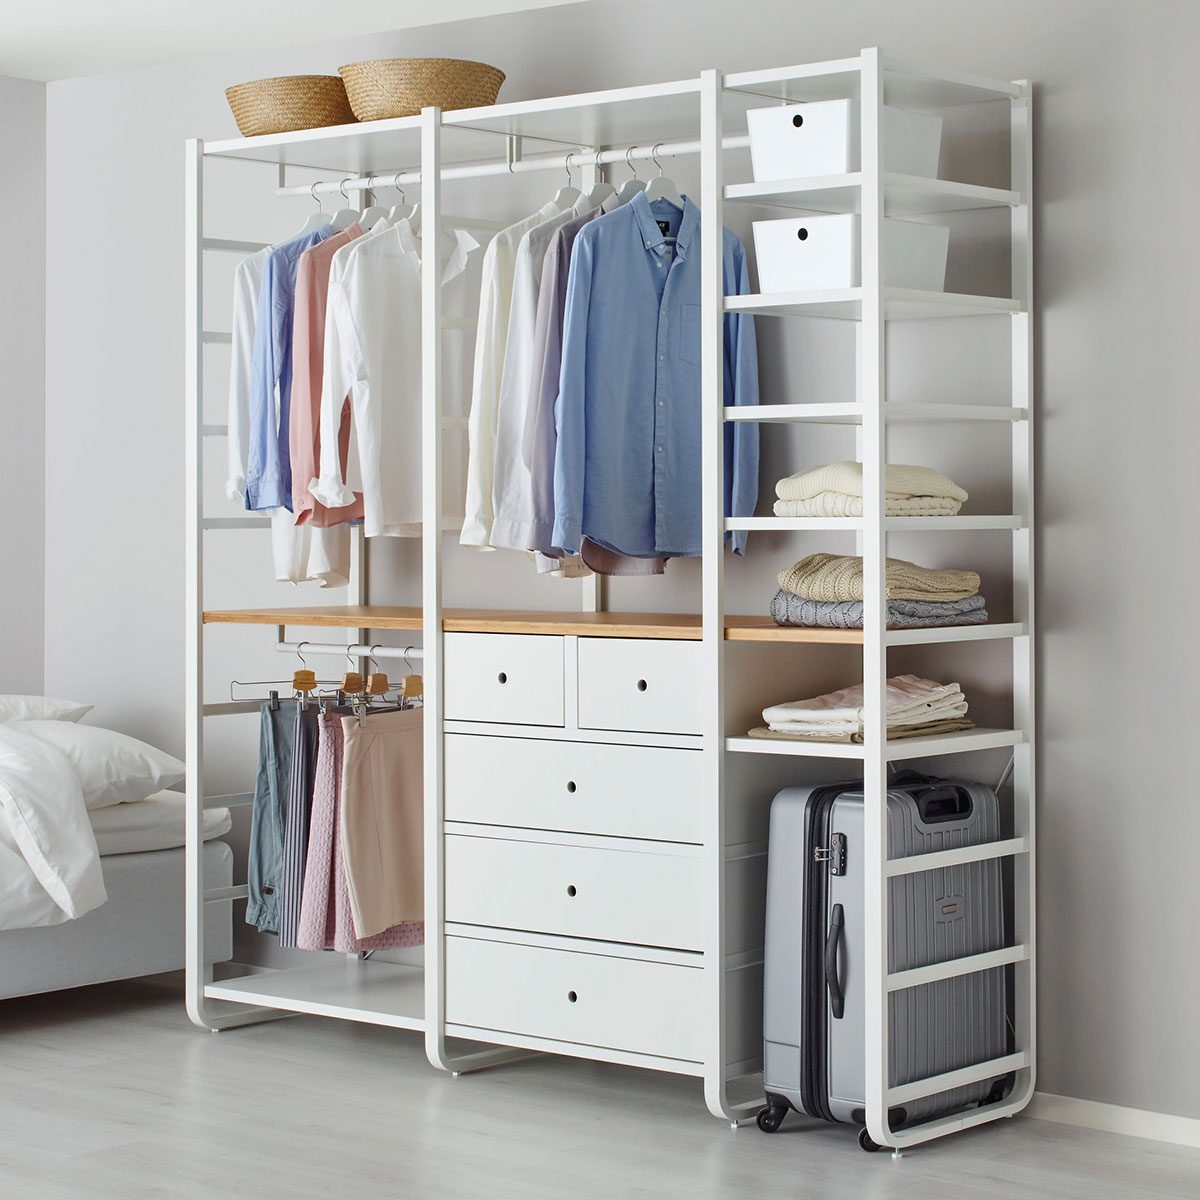 16 Reasons IKEA is a DIYers Dream Destination | The Family Handyman